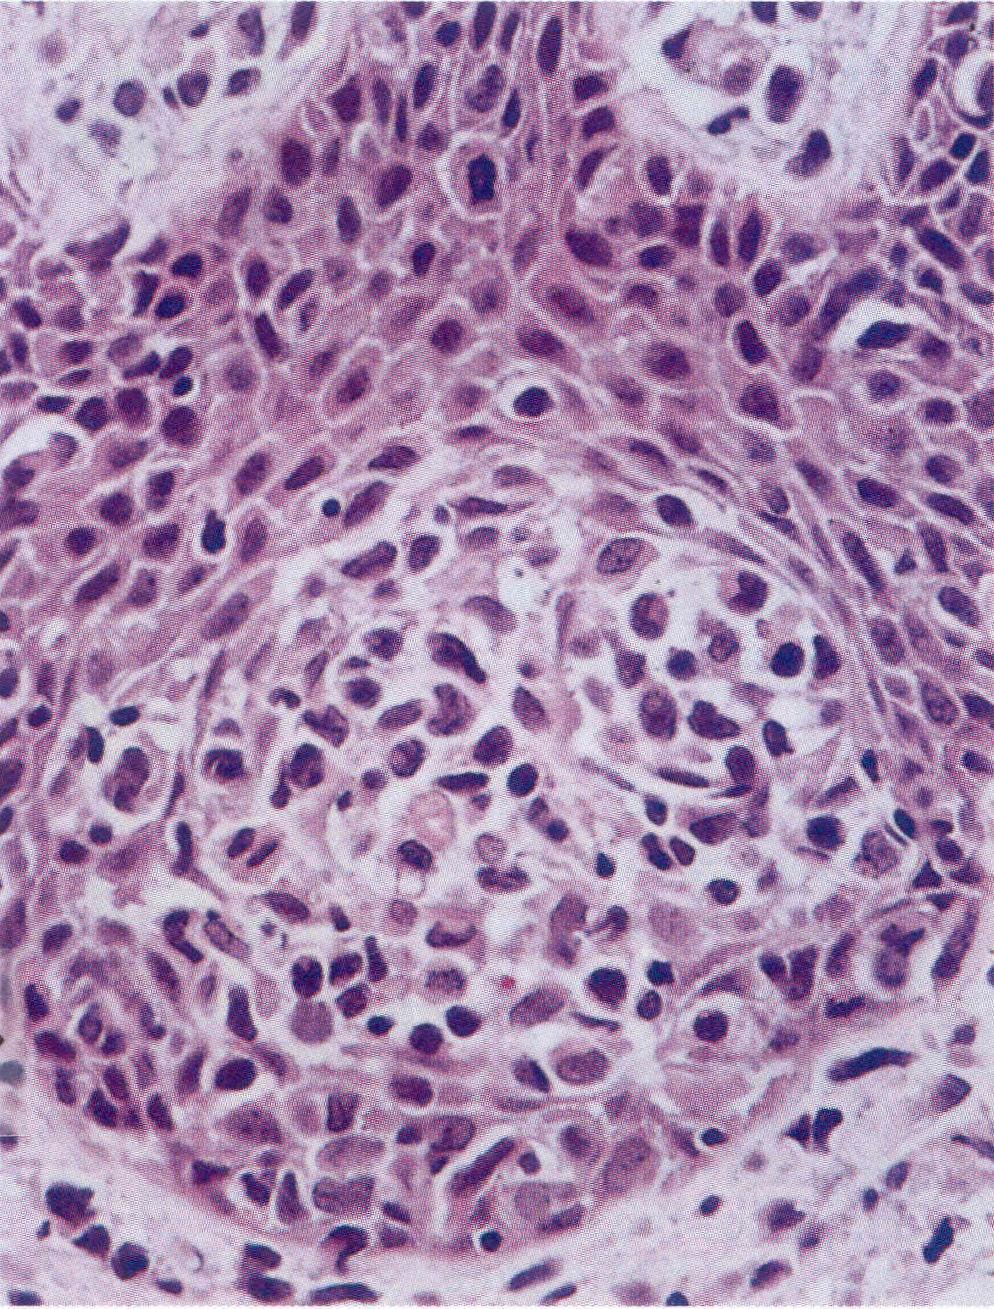 T-solu lymfoomat Pautierin abskessi